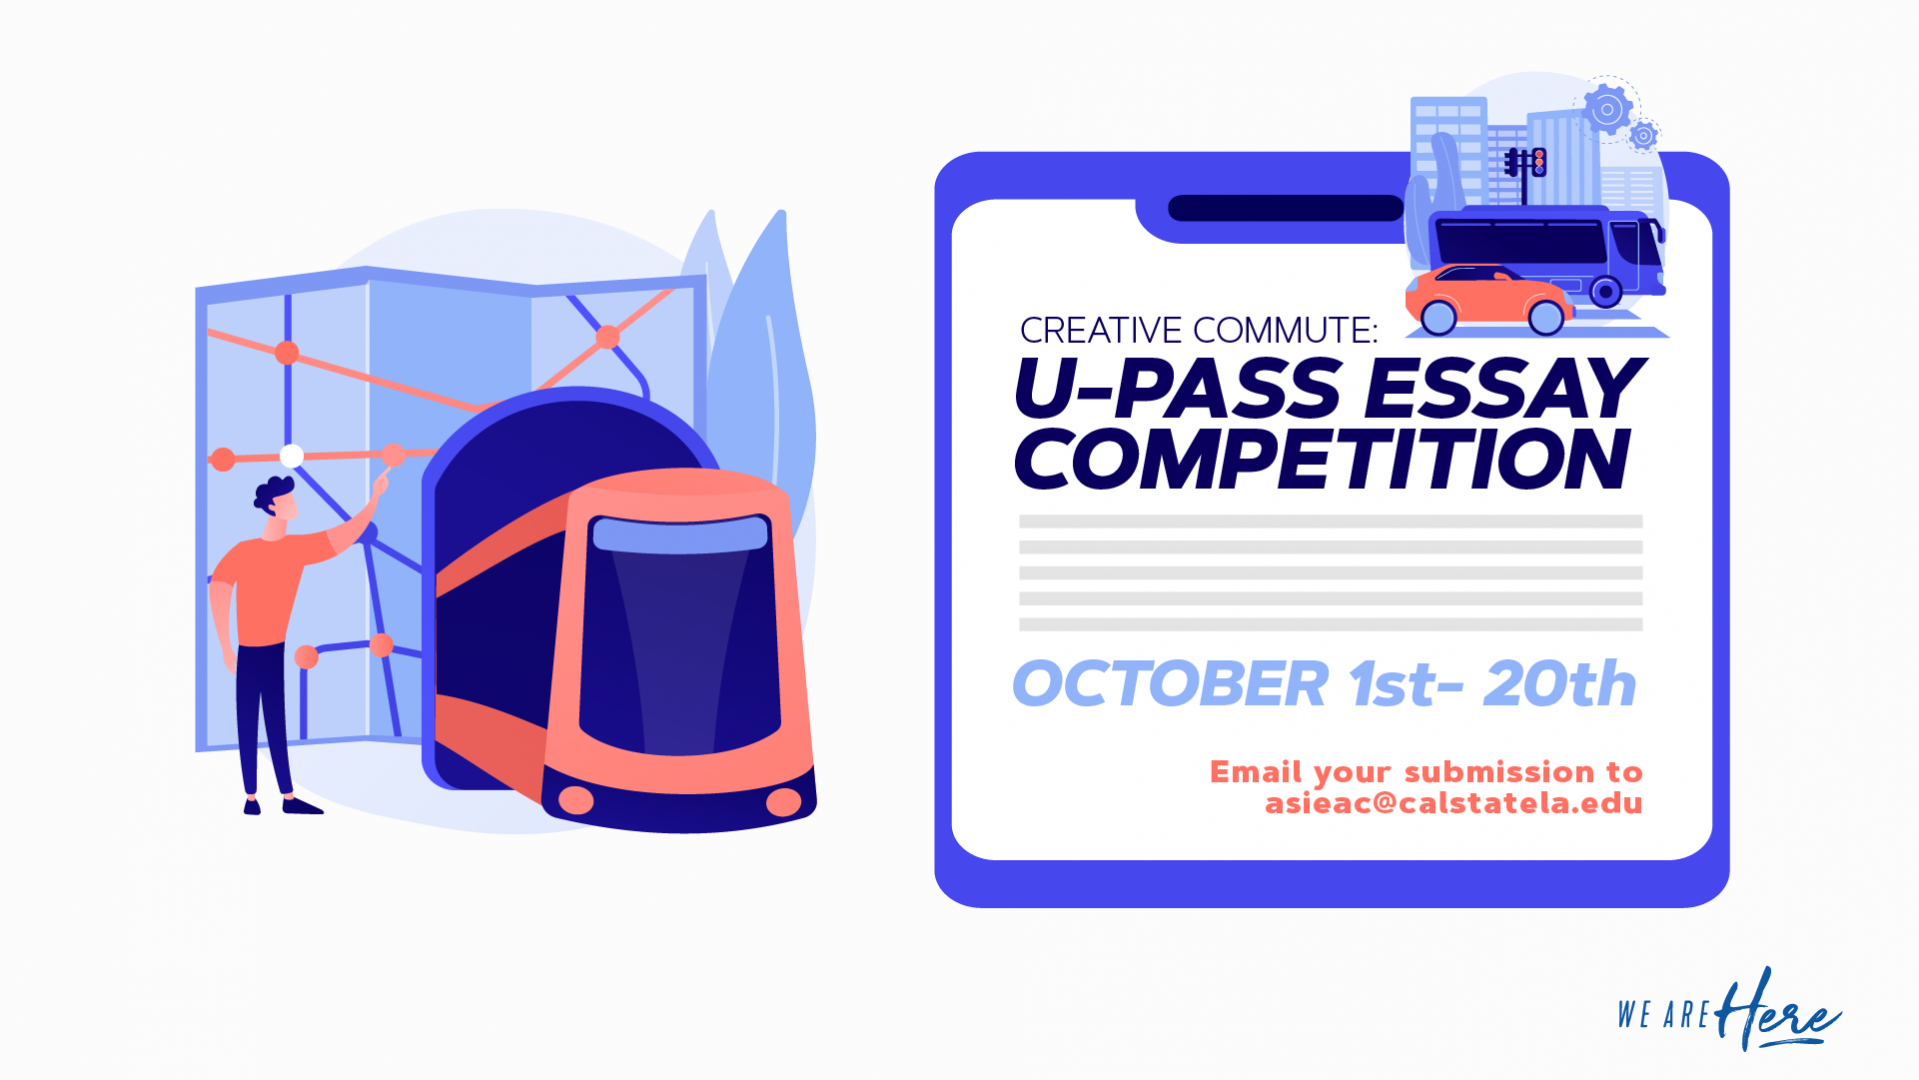 Creative Commute: U-Pass Essay Competition